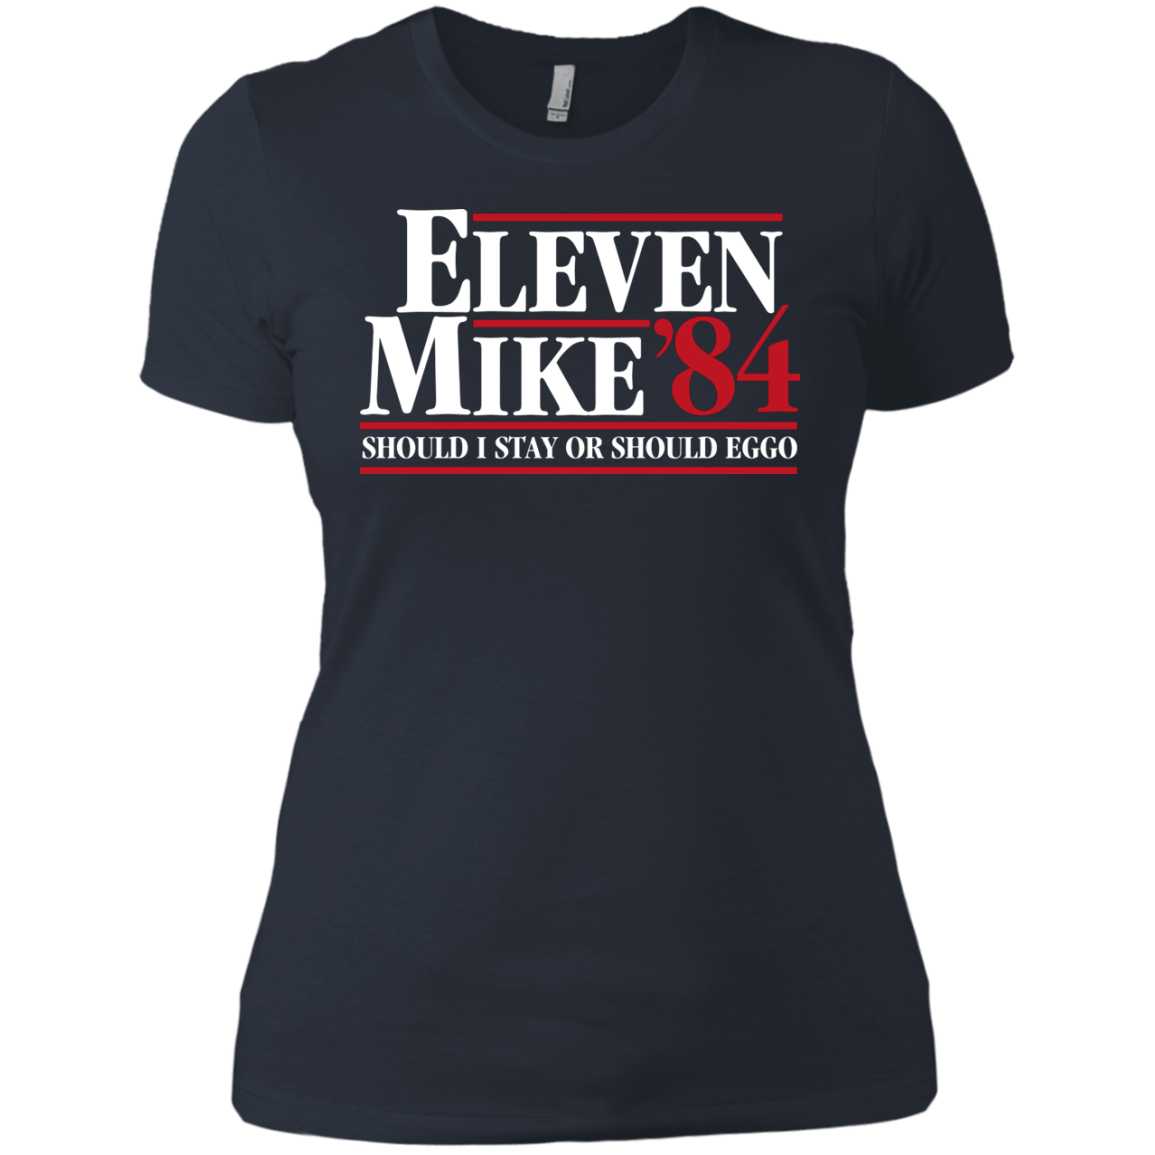 T-Shirts Indigo / X-Small Eleven Mike 84 - Should I Stay or Should Eggo Women's Premium T-Shirt